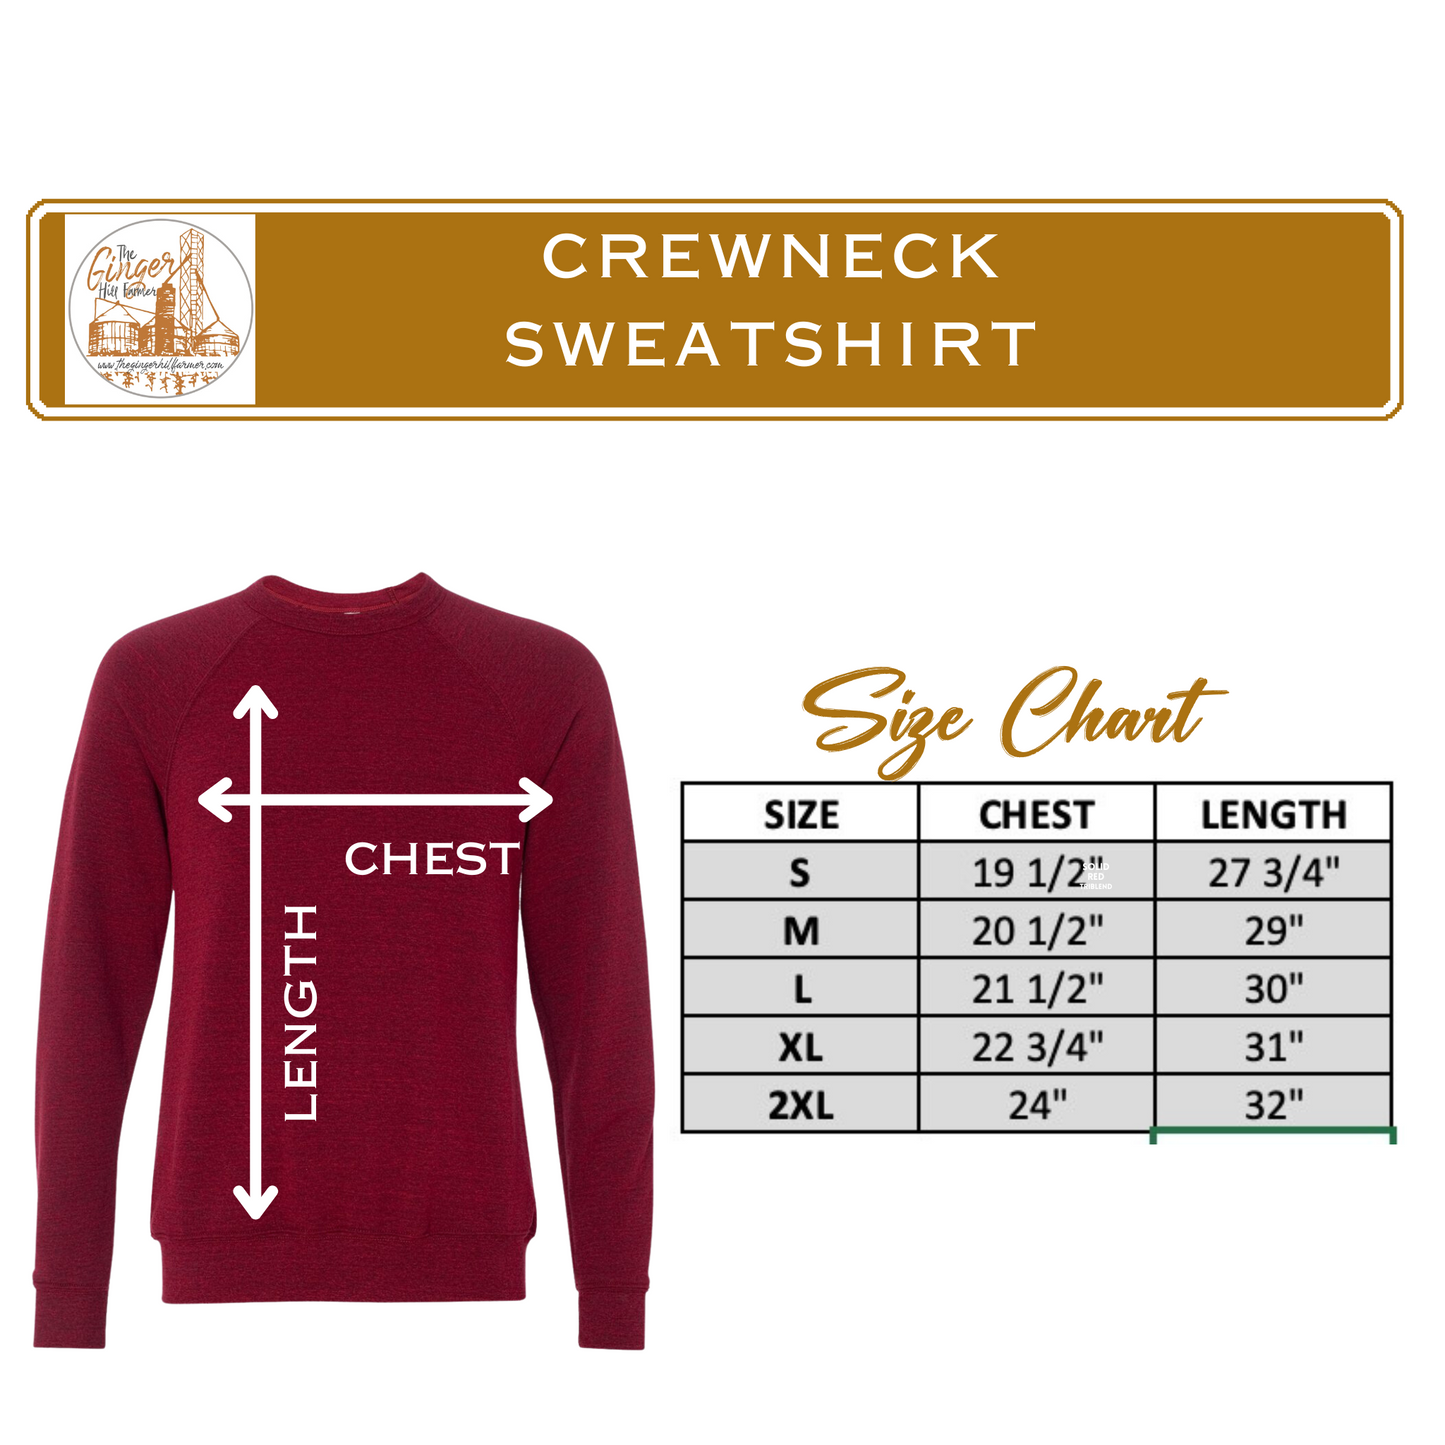 crewneck size chart